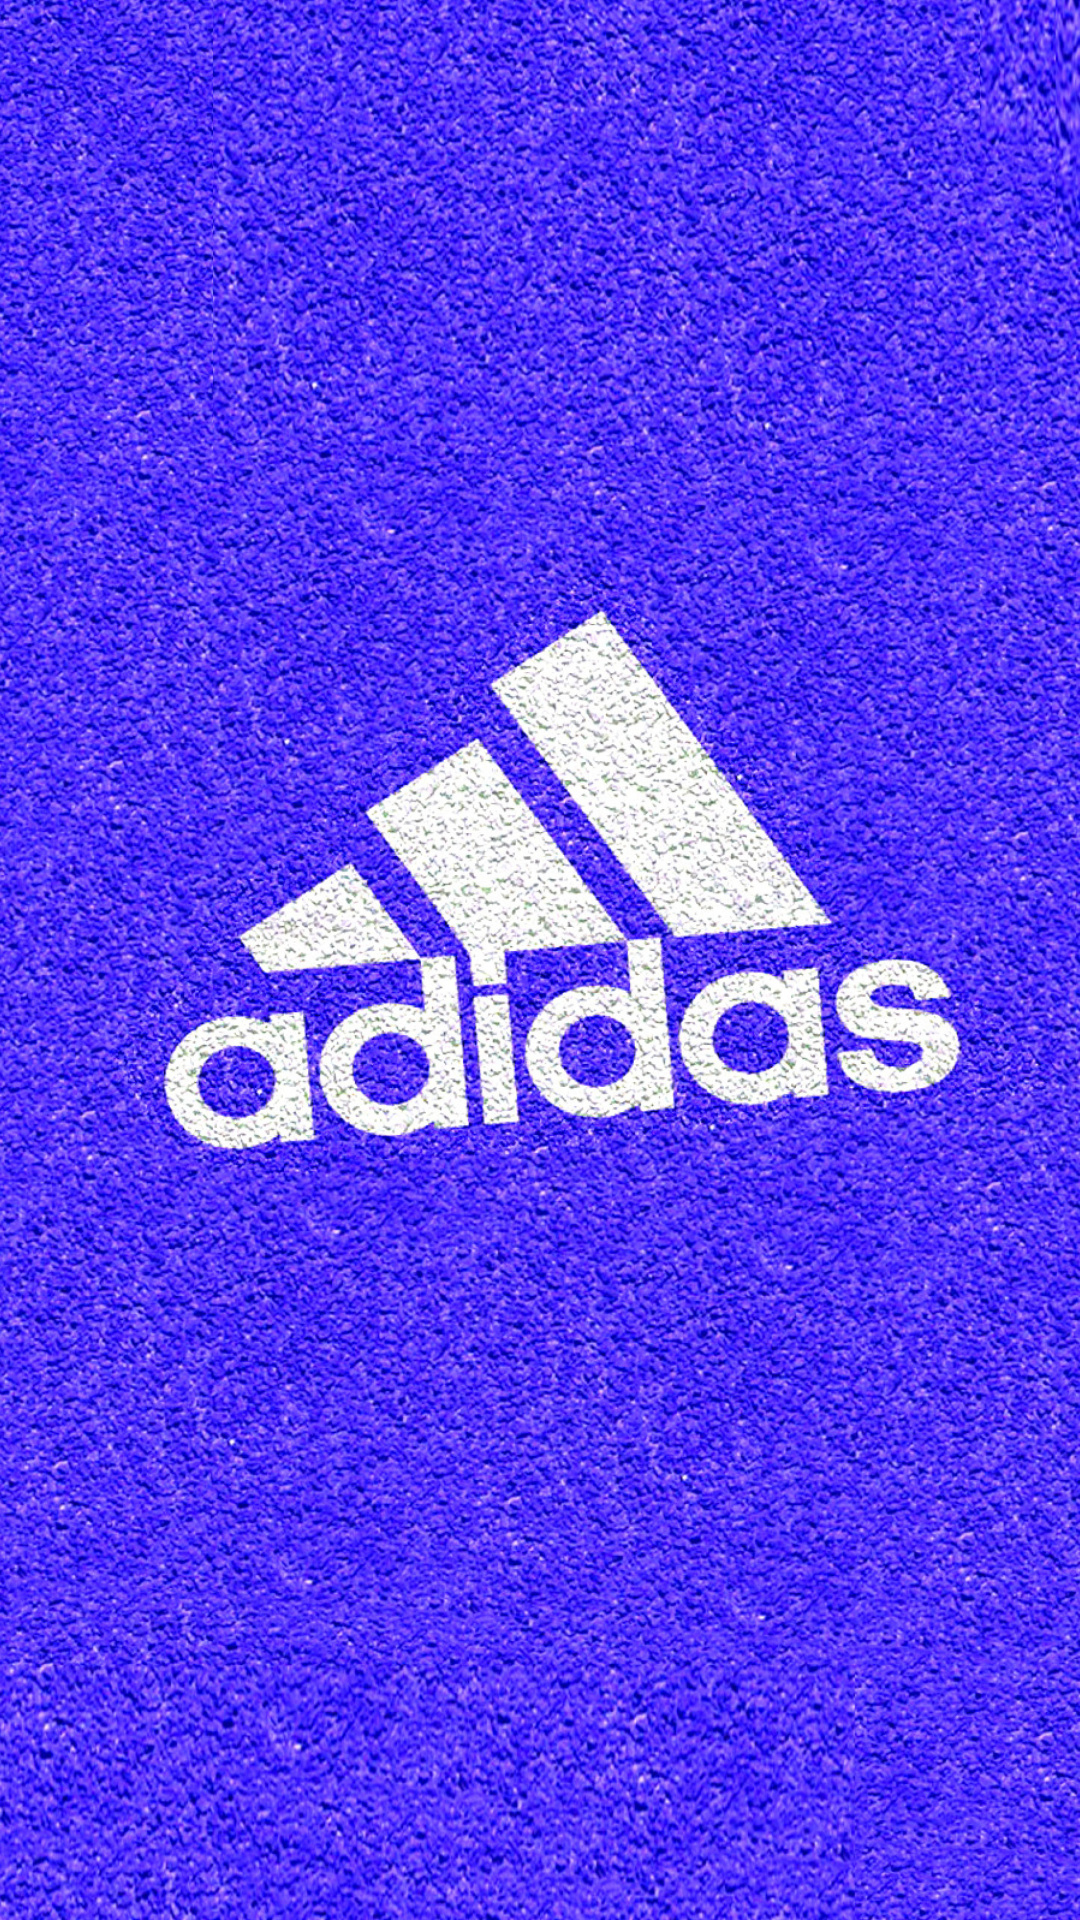 Adidas Iphone Hd Wallpaper Pixelstalk Net